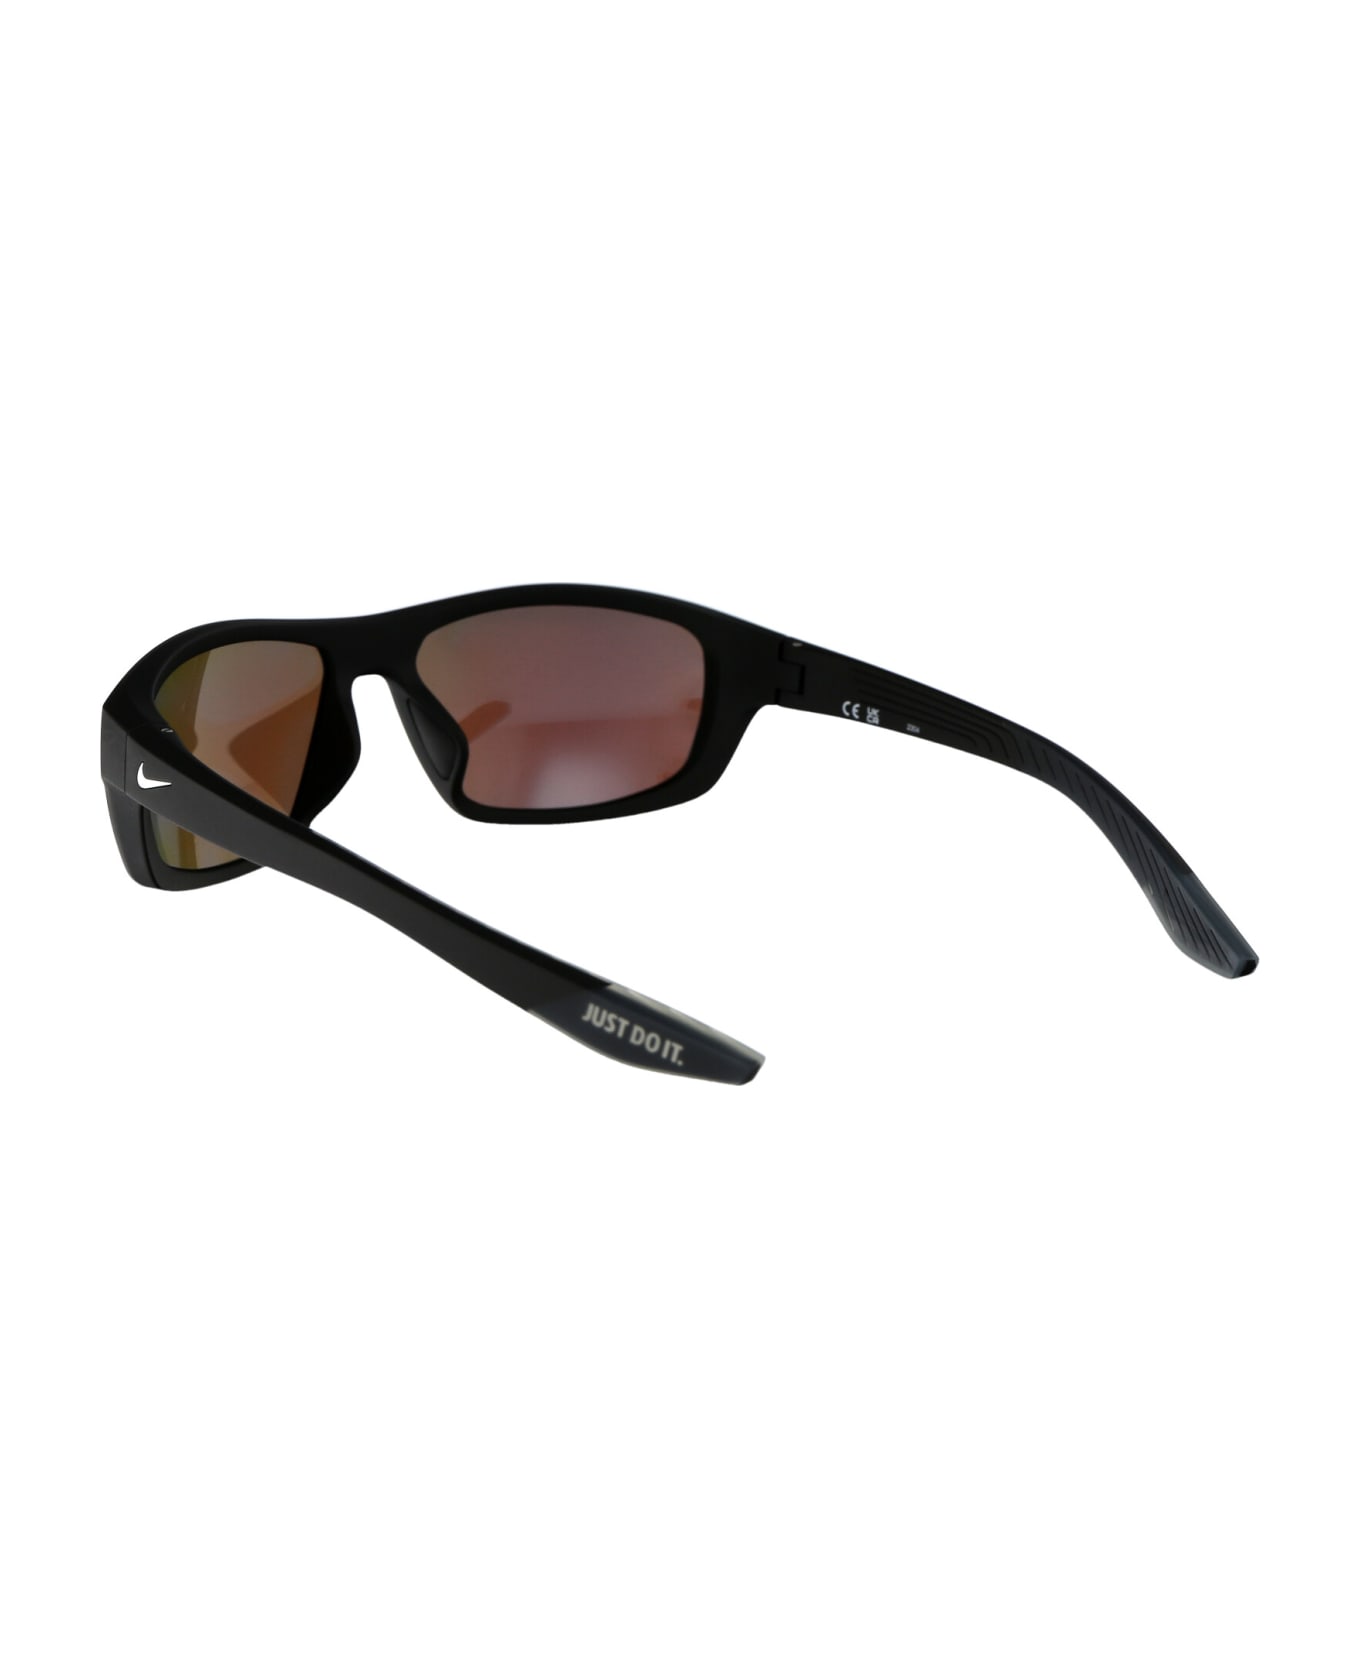 Nike Brazen Boost M Sunglasses - 011 MATTE BLACK NOIR MAT